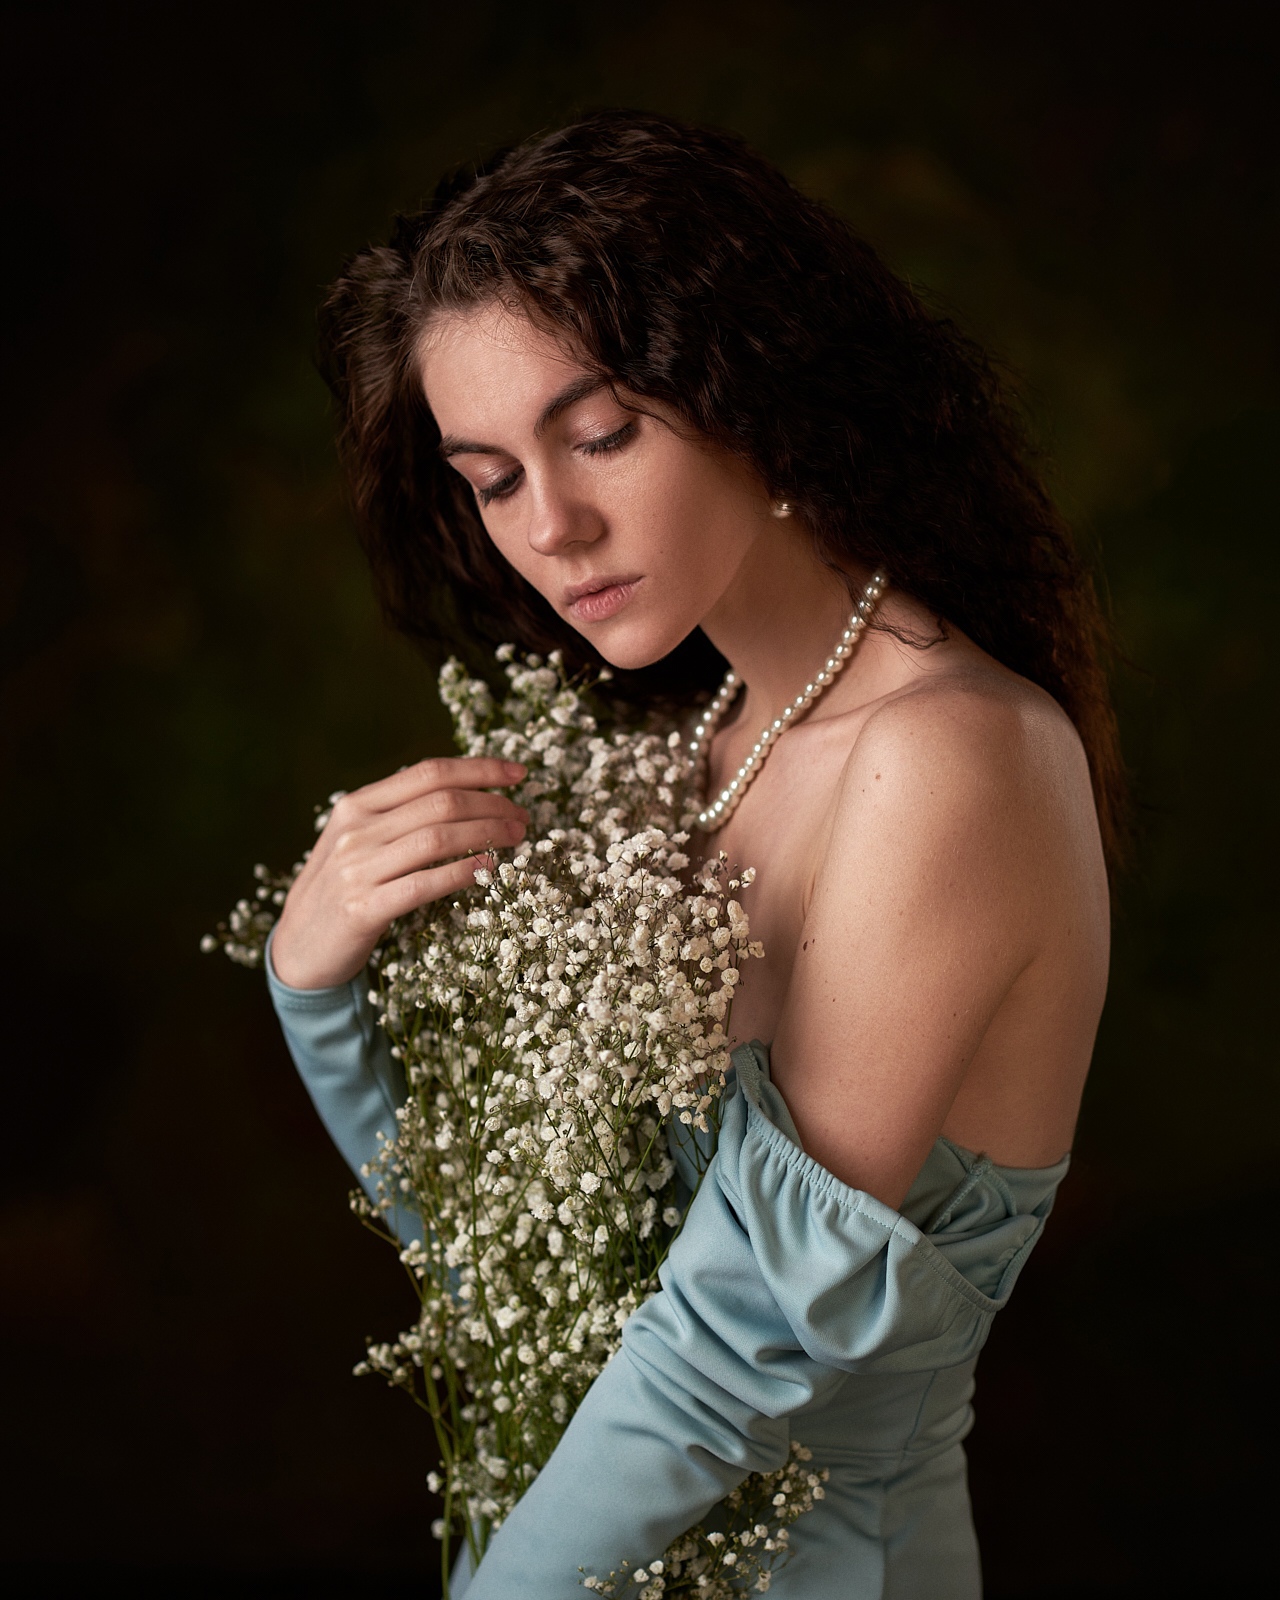 Max Pyzhik Women Brunette Flowers Necklace Bare Shoulders Beads Simple Background 1280x1600